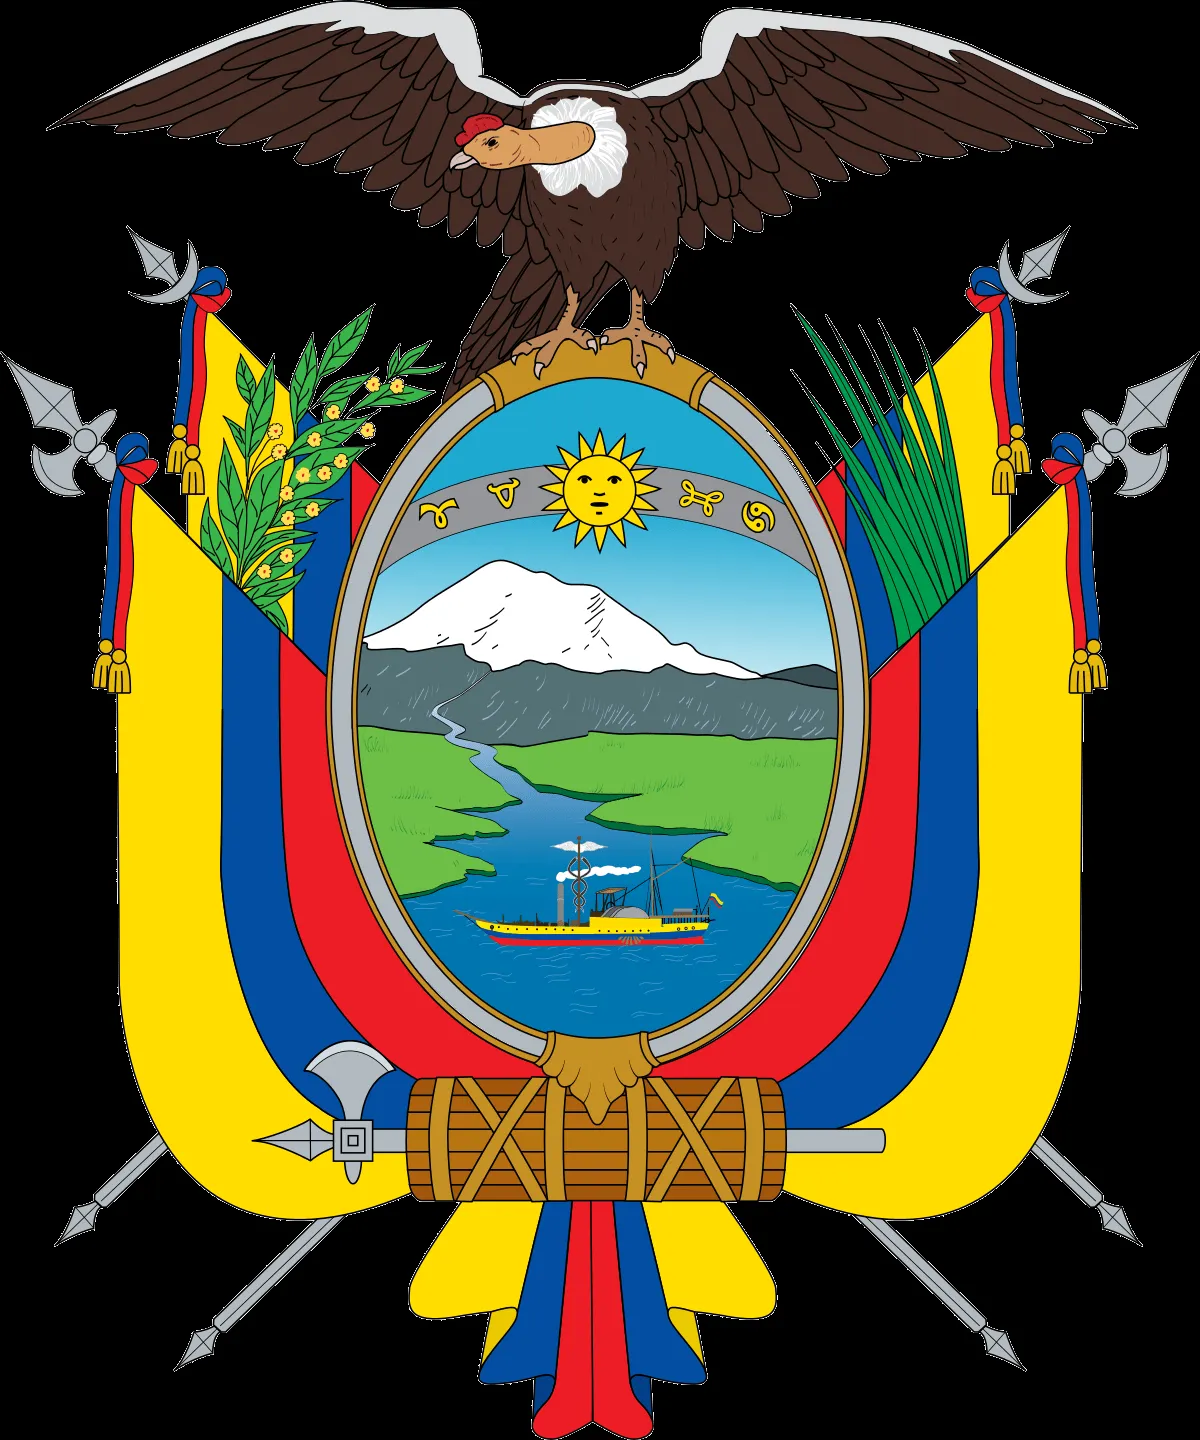 Escudo del Ecuador - Wikipedia, la enciclopedia libre